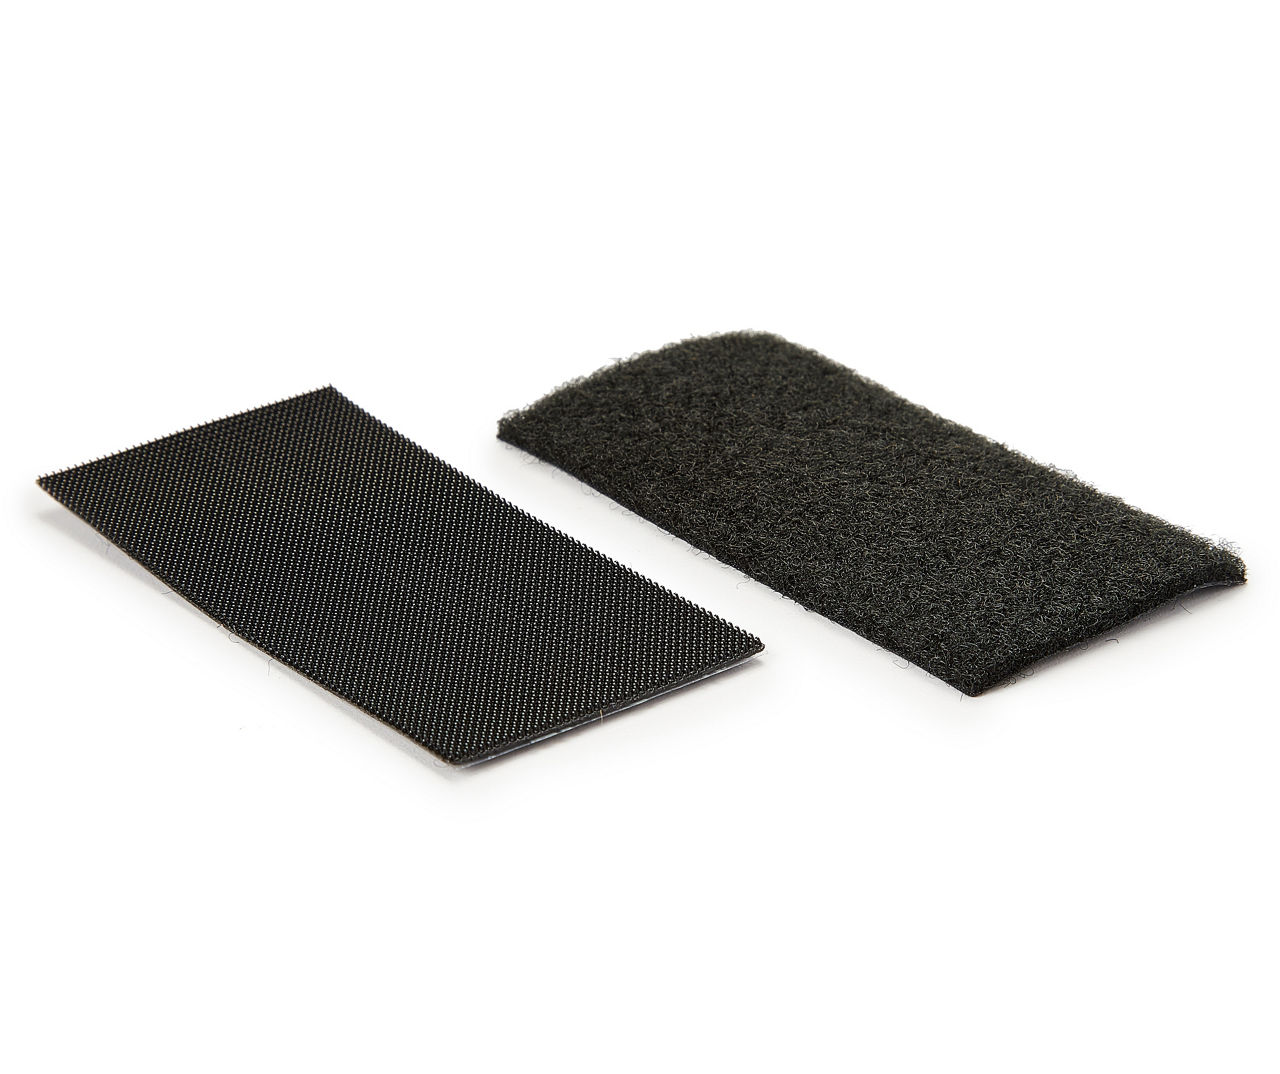 Velcro Black Industrial Strength Strips, 2-Pack